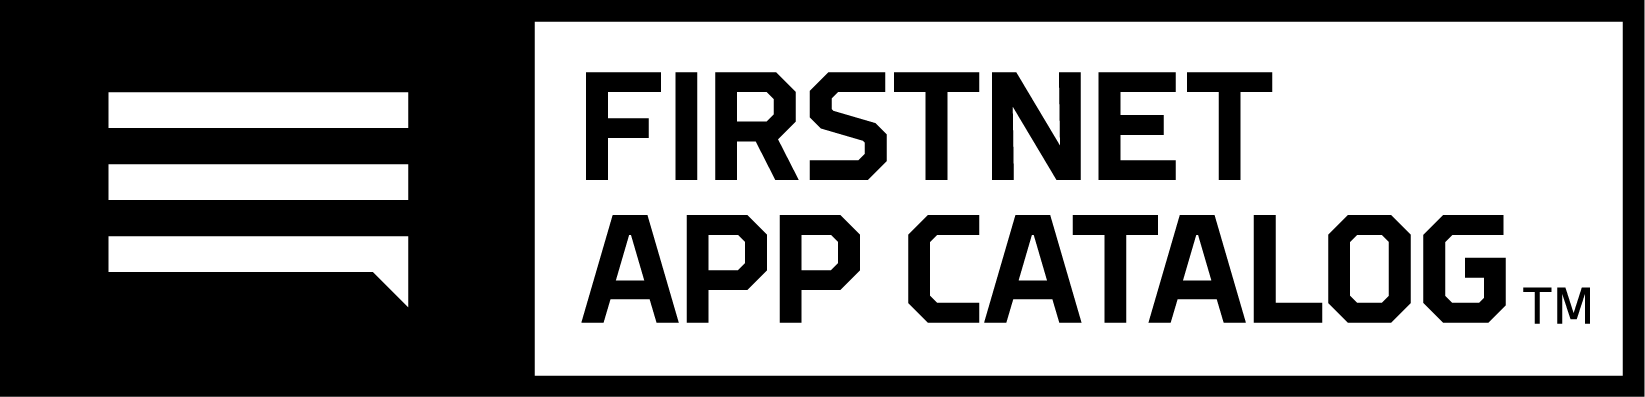 FirstNet listed app catalog